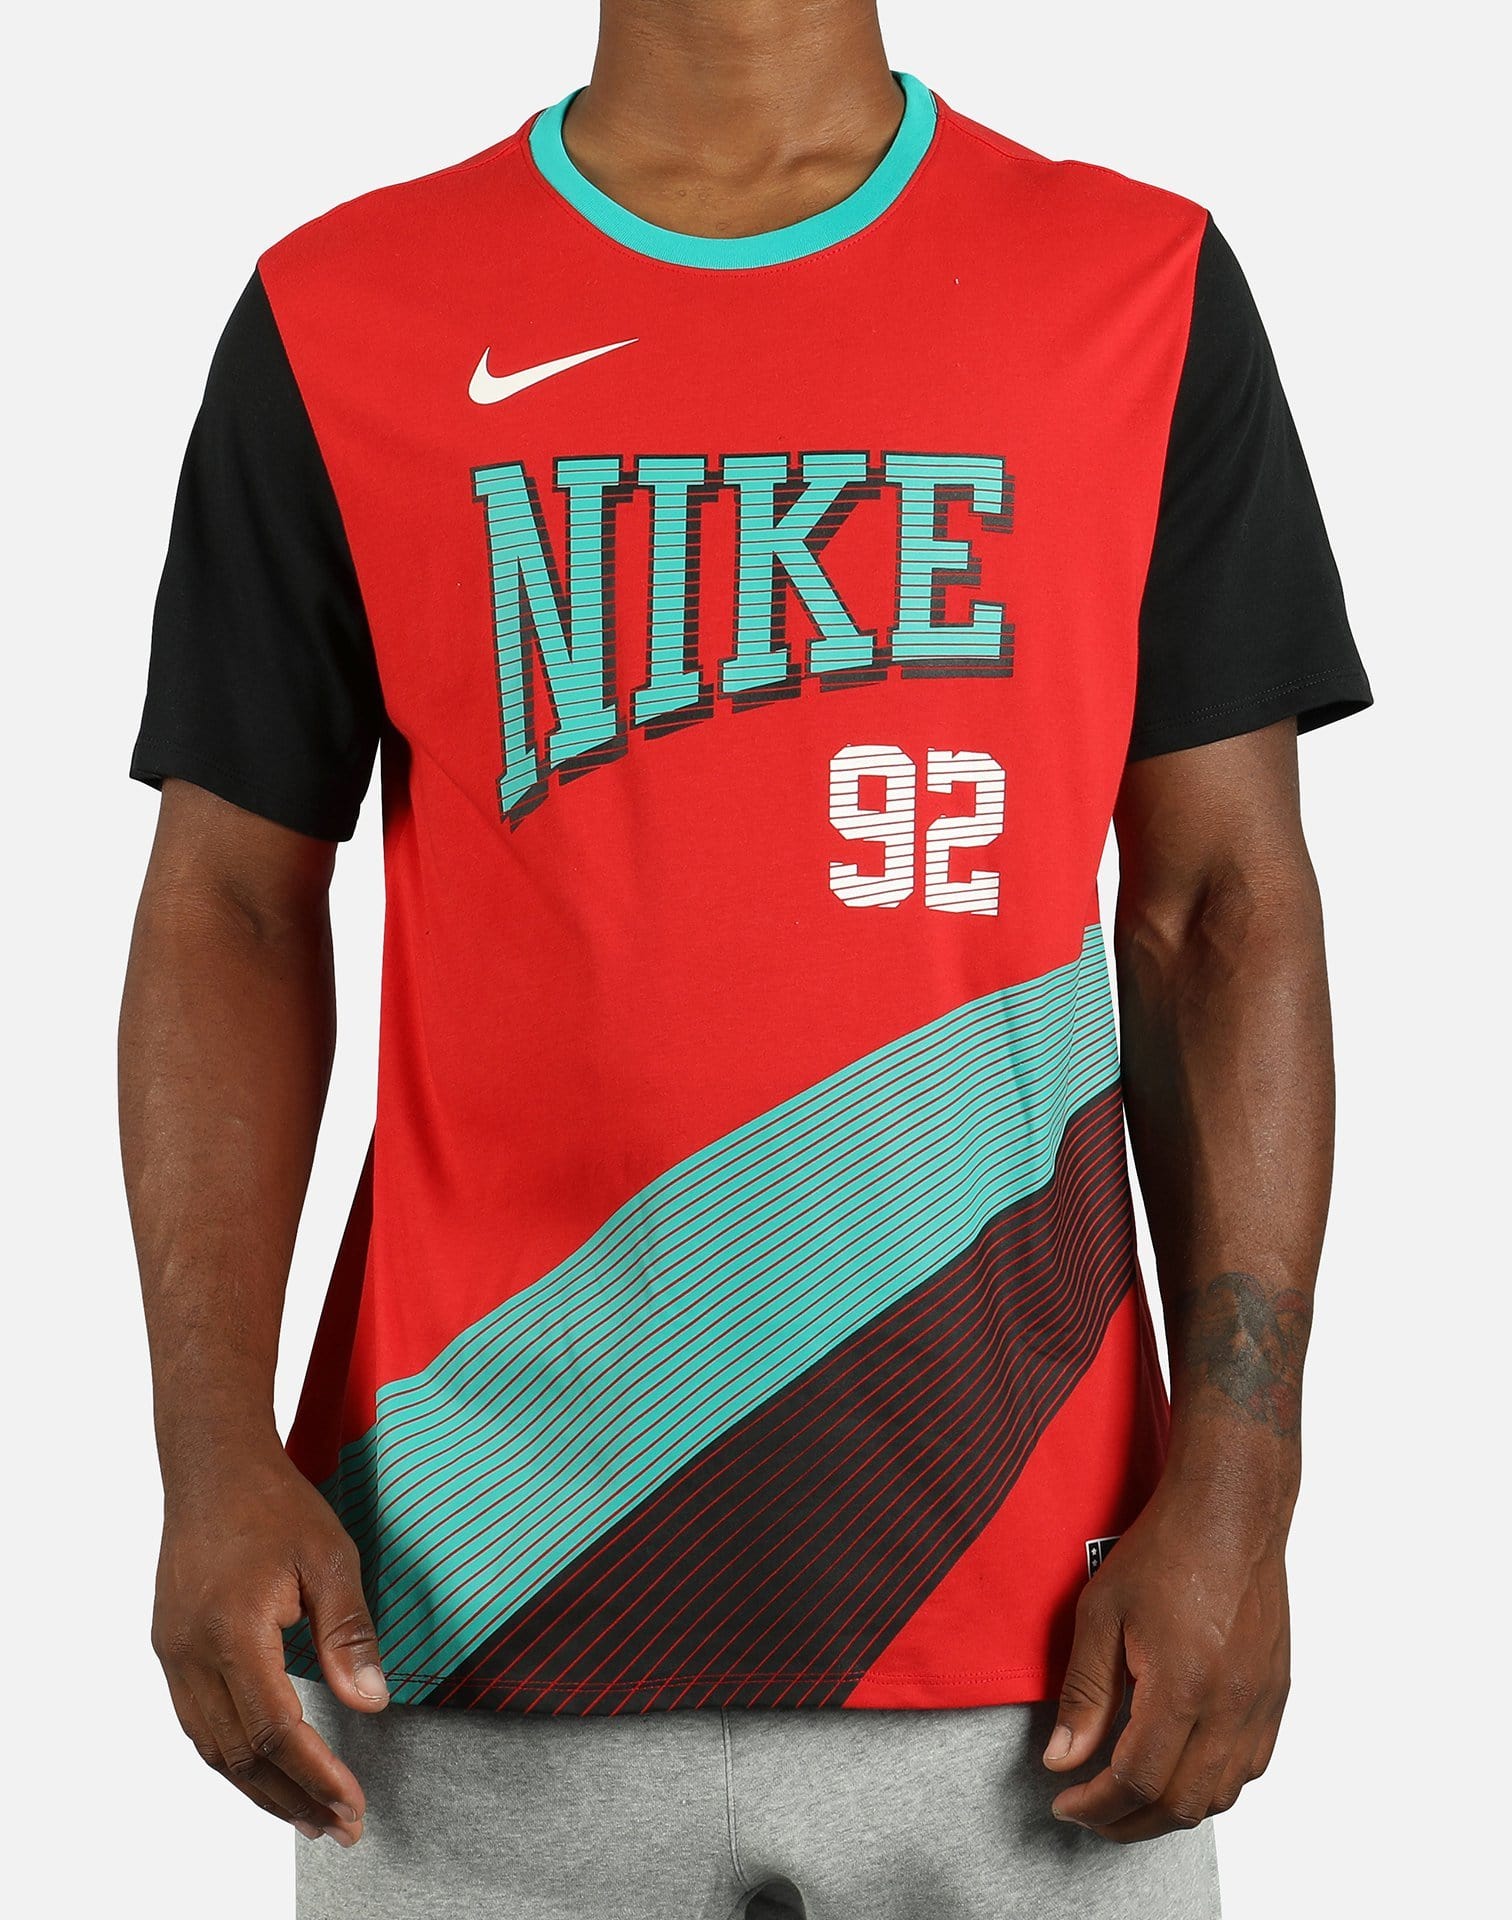 Nike Men's 90 Basketball 92 Tee